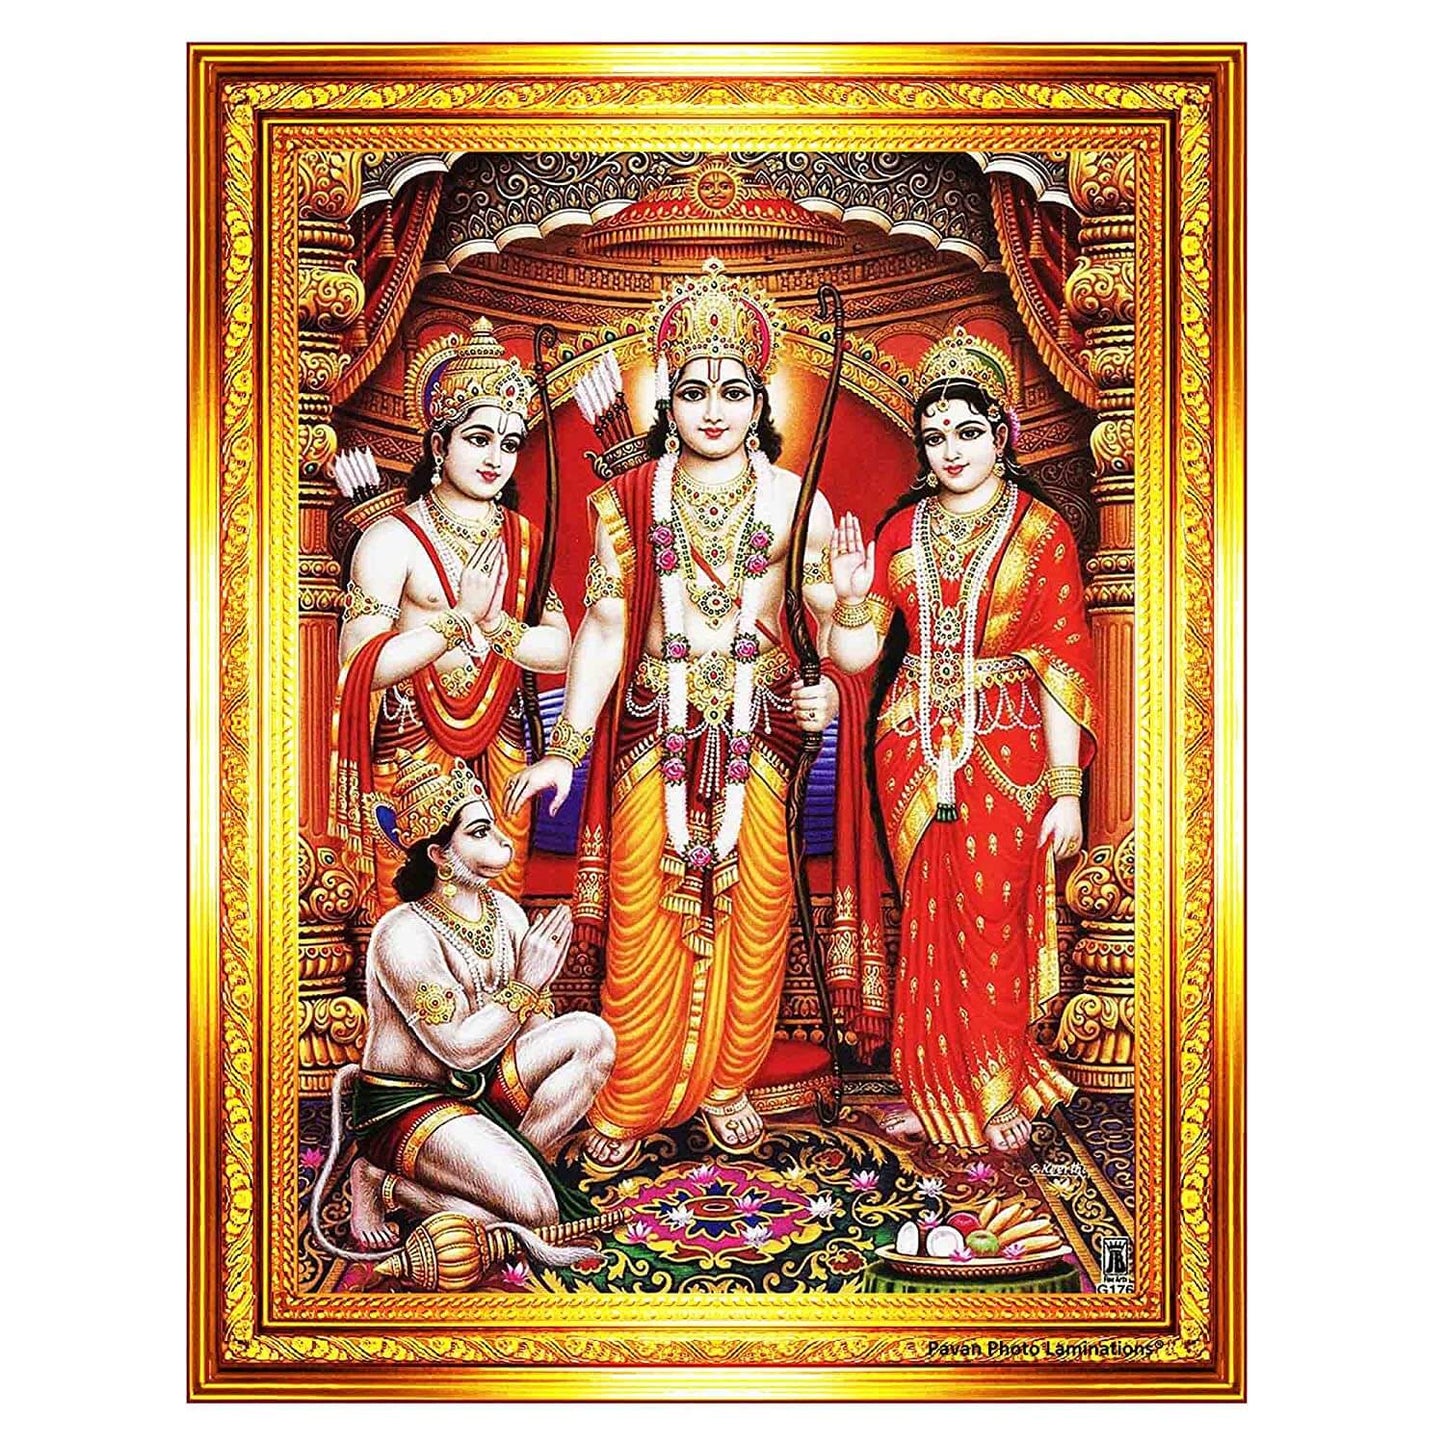 Lord Shri Ram Sita Laxman Hanuman Darbar Parivar Family Photo Frame for Home Mandir, Wall Decoration, Gift Item (Glossy, 10 x 12 in) Mangal Fashions | Indian Home Decor and Craft